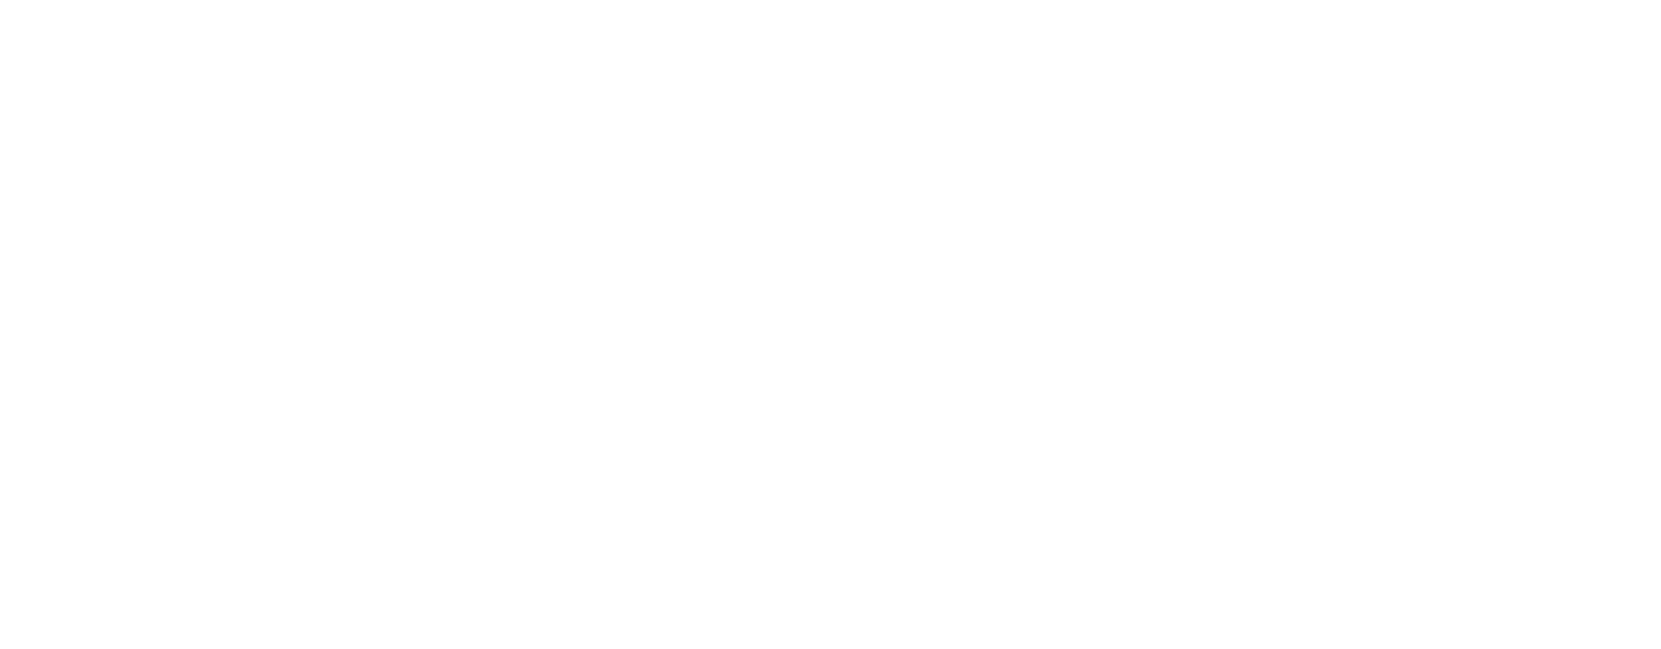 Gulfside Healthcare Services Logo